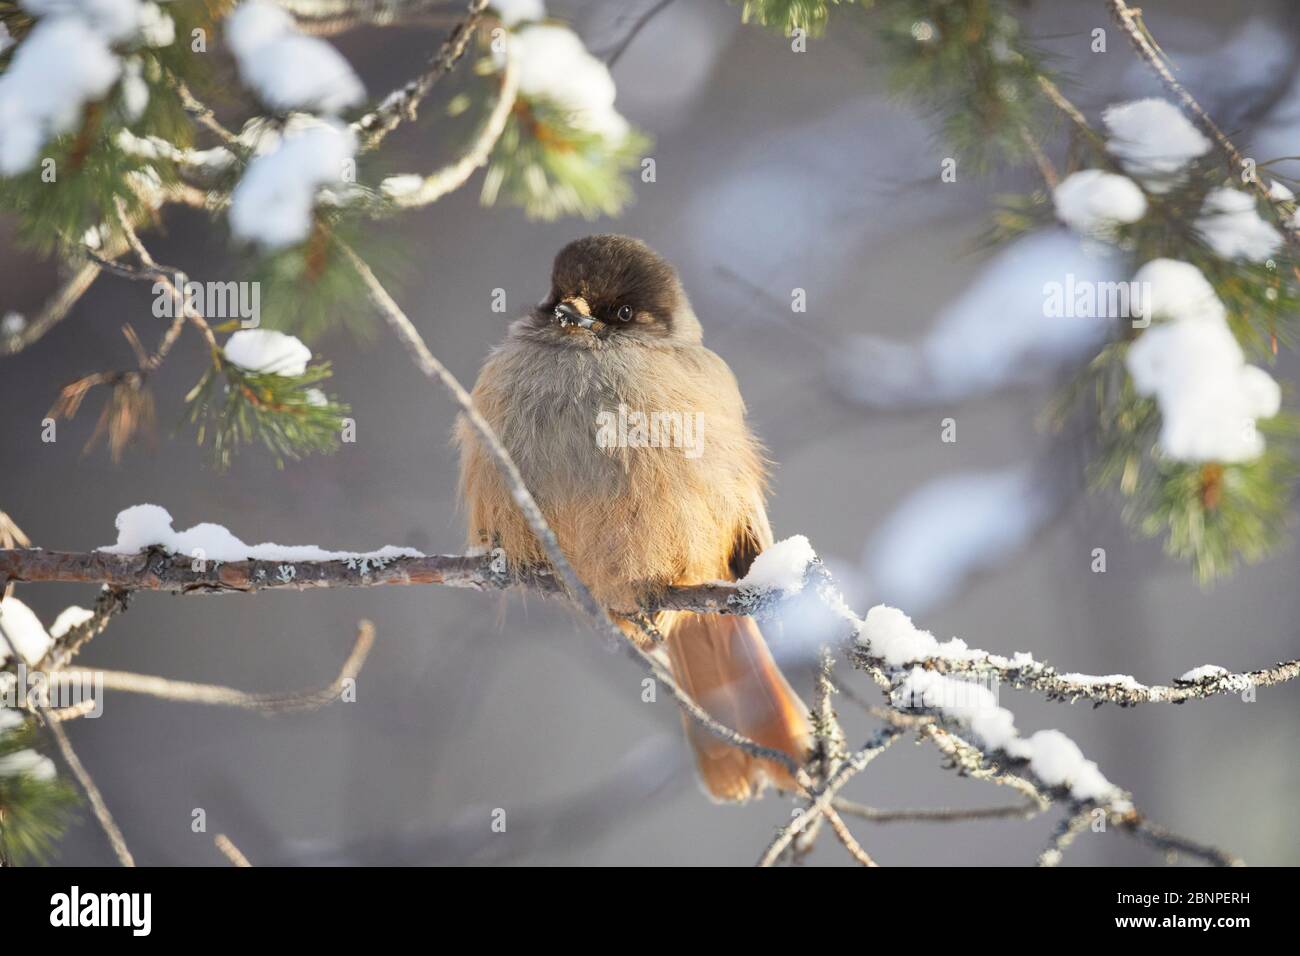 Siberian jay, Perisoreus infaustus, Finland, winter Stock Photo